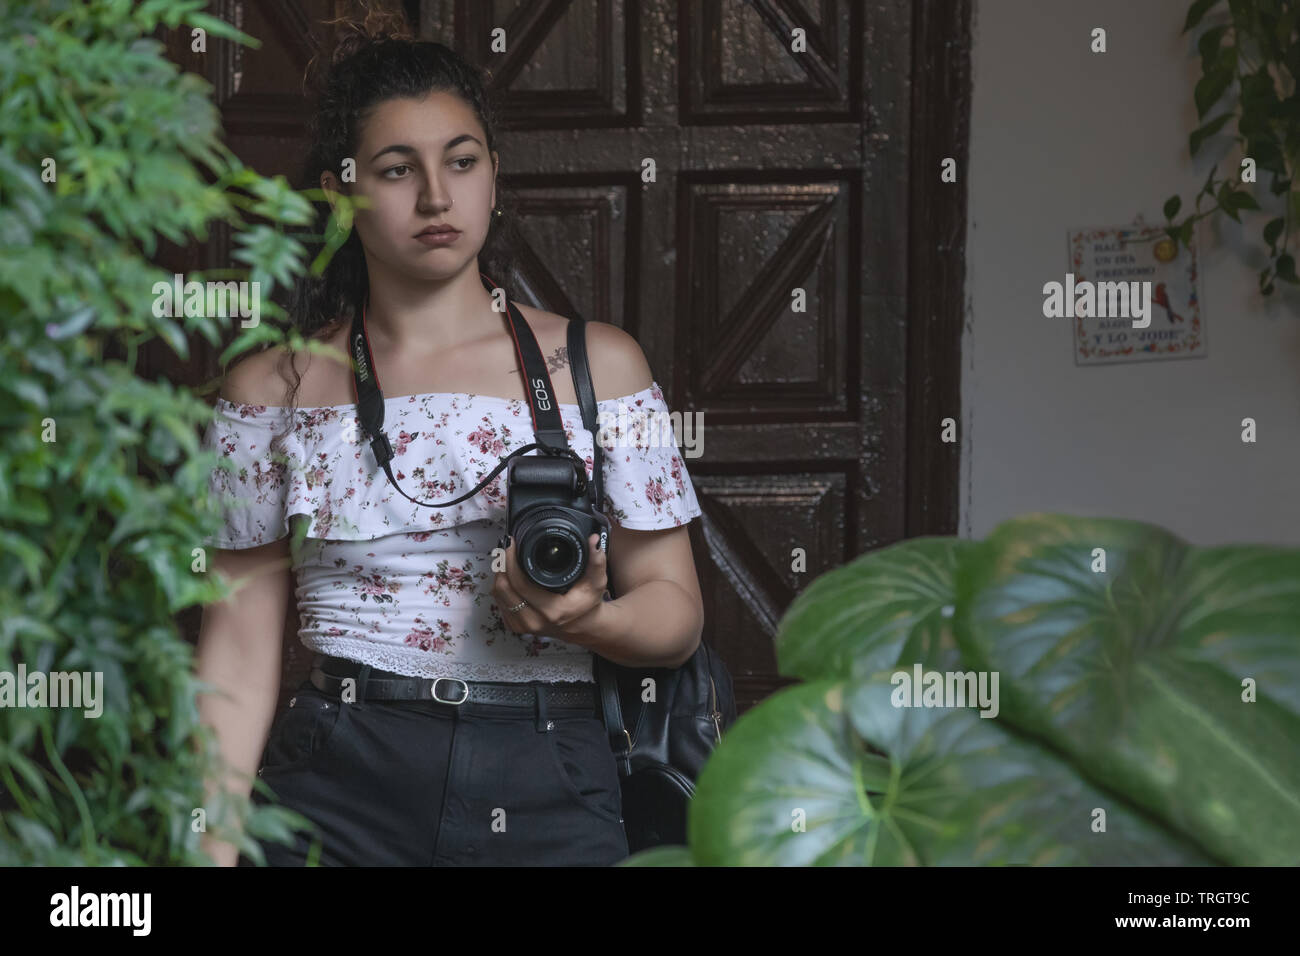 Cordoba, Spain - May 16, 2019: A young woman photographer holding a Canon photo camera in a Cordovan patio Stock Photo